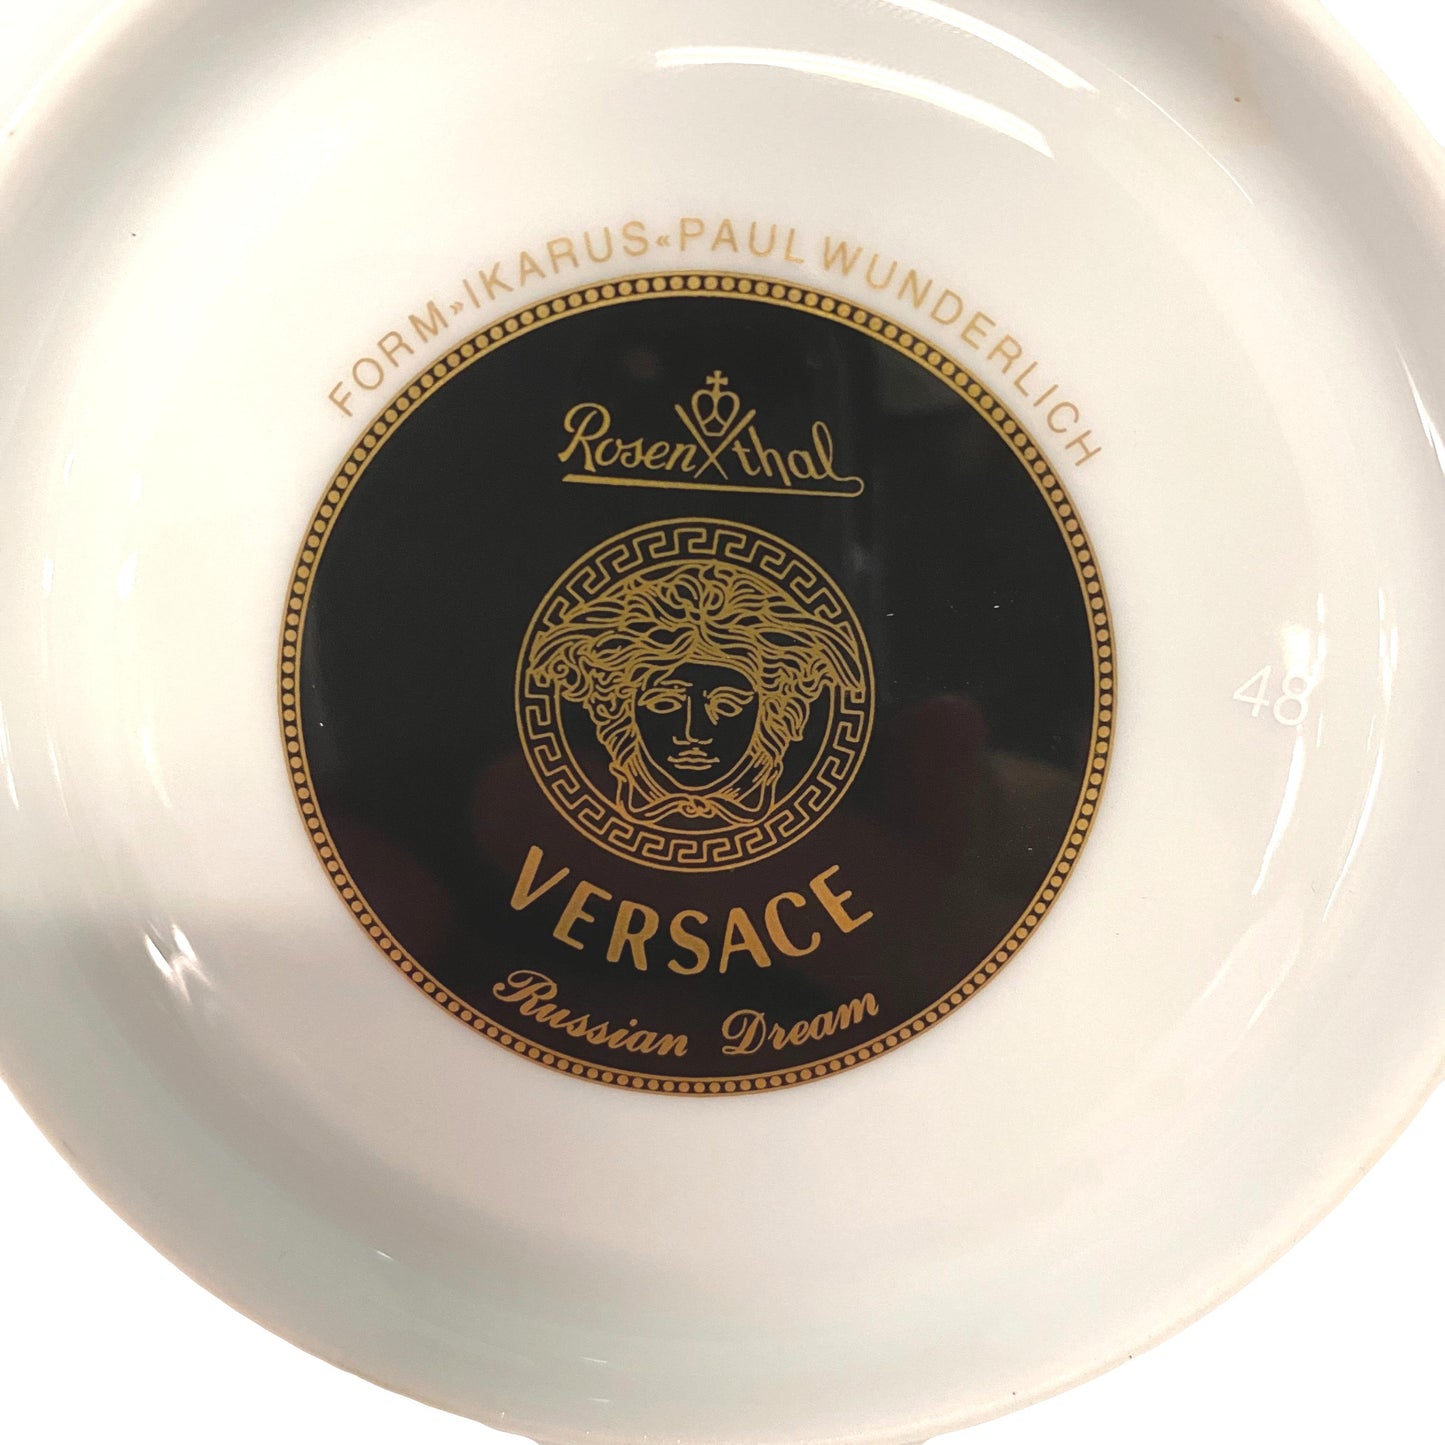 Versace Russian Dream Cup & Saucer